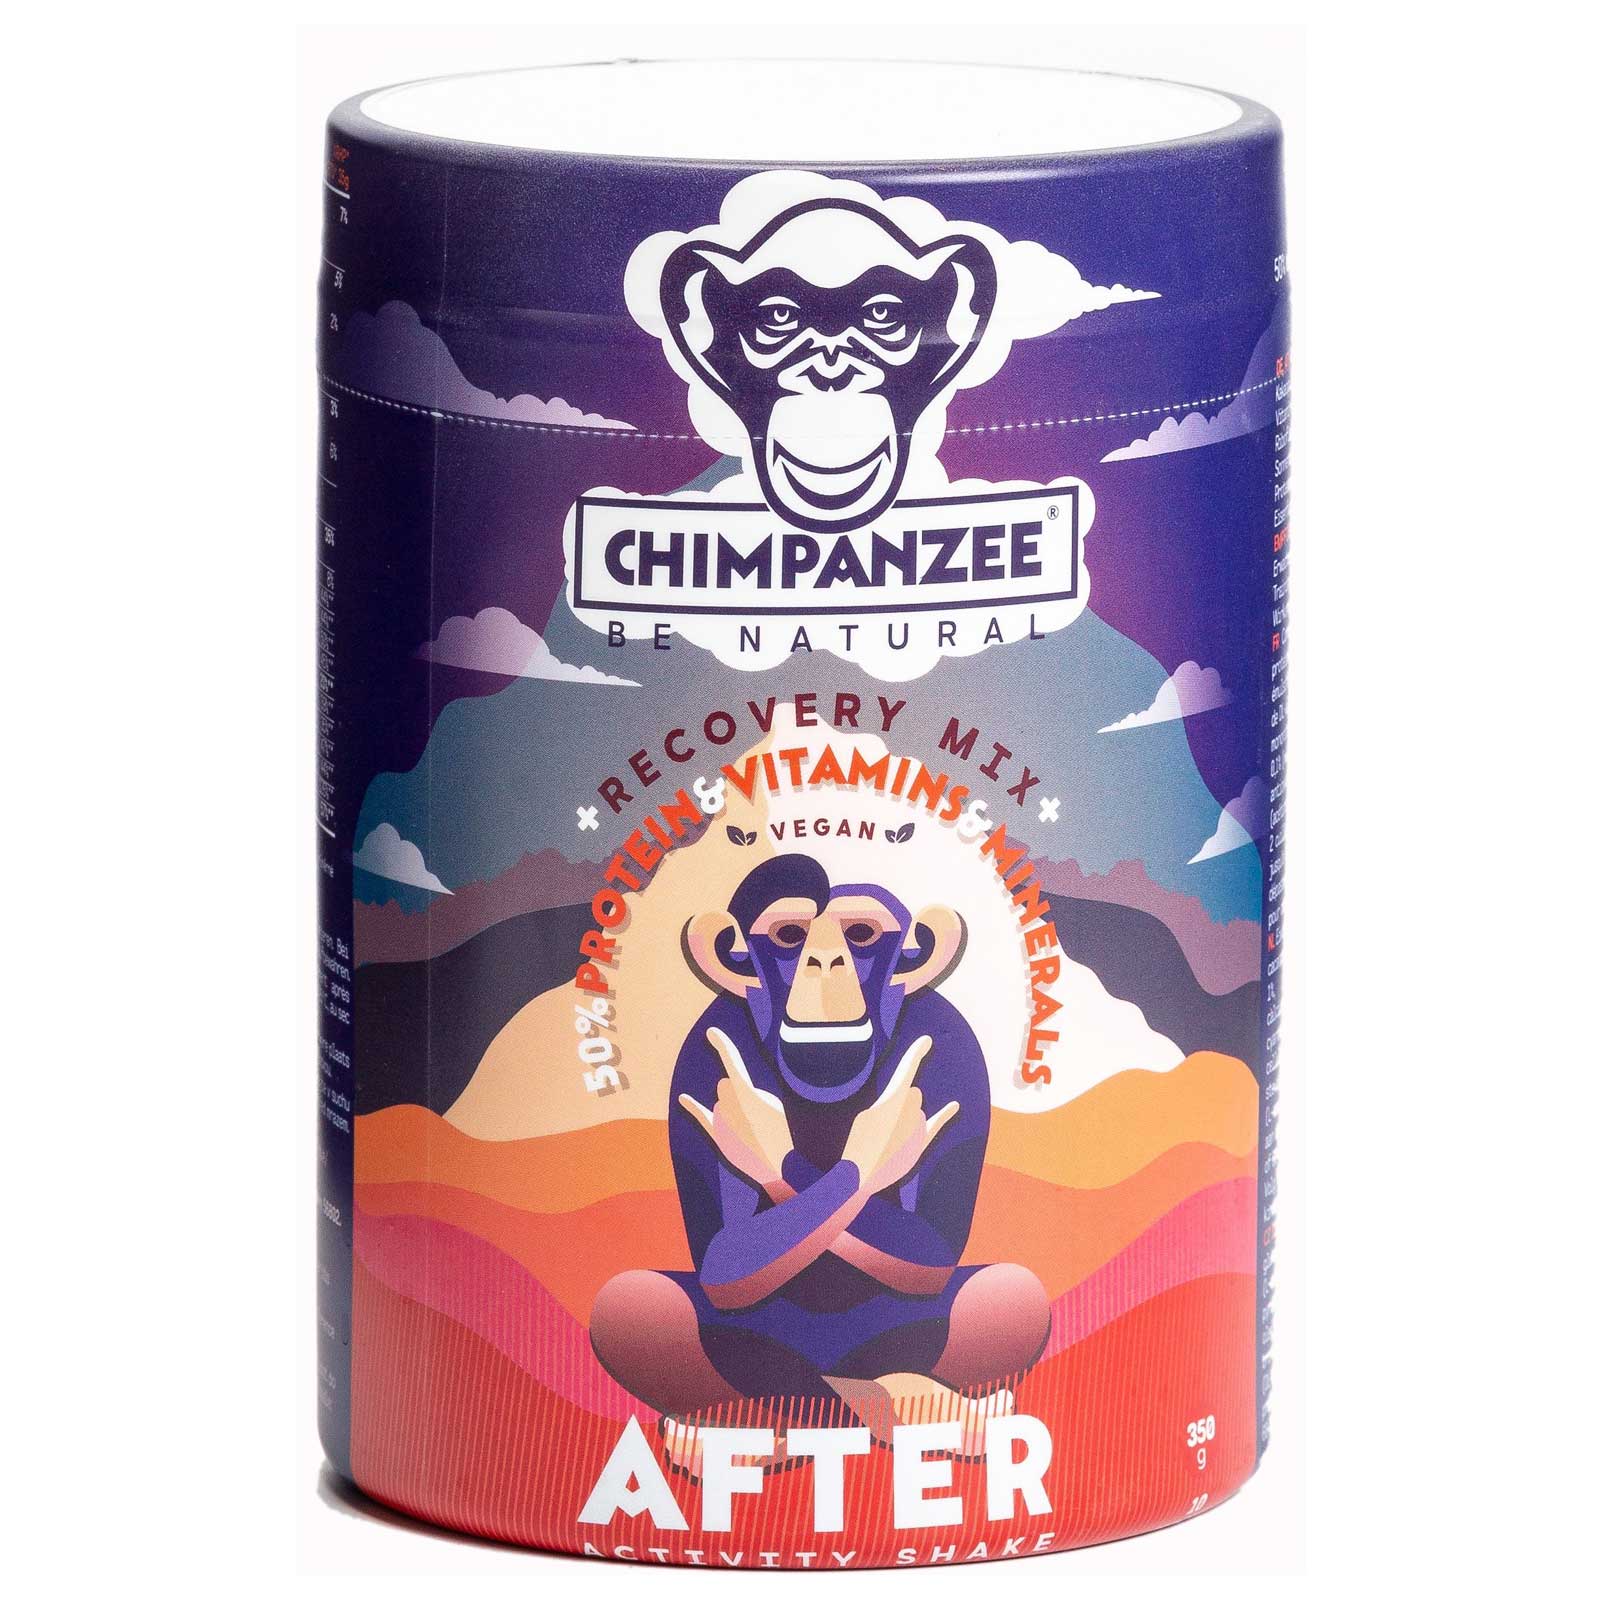 Productfoto van Chimpanzee QuickMix Recovery - After Activity Shake - 350g